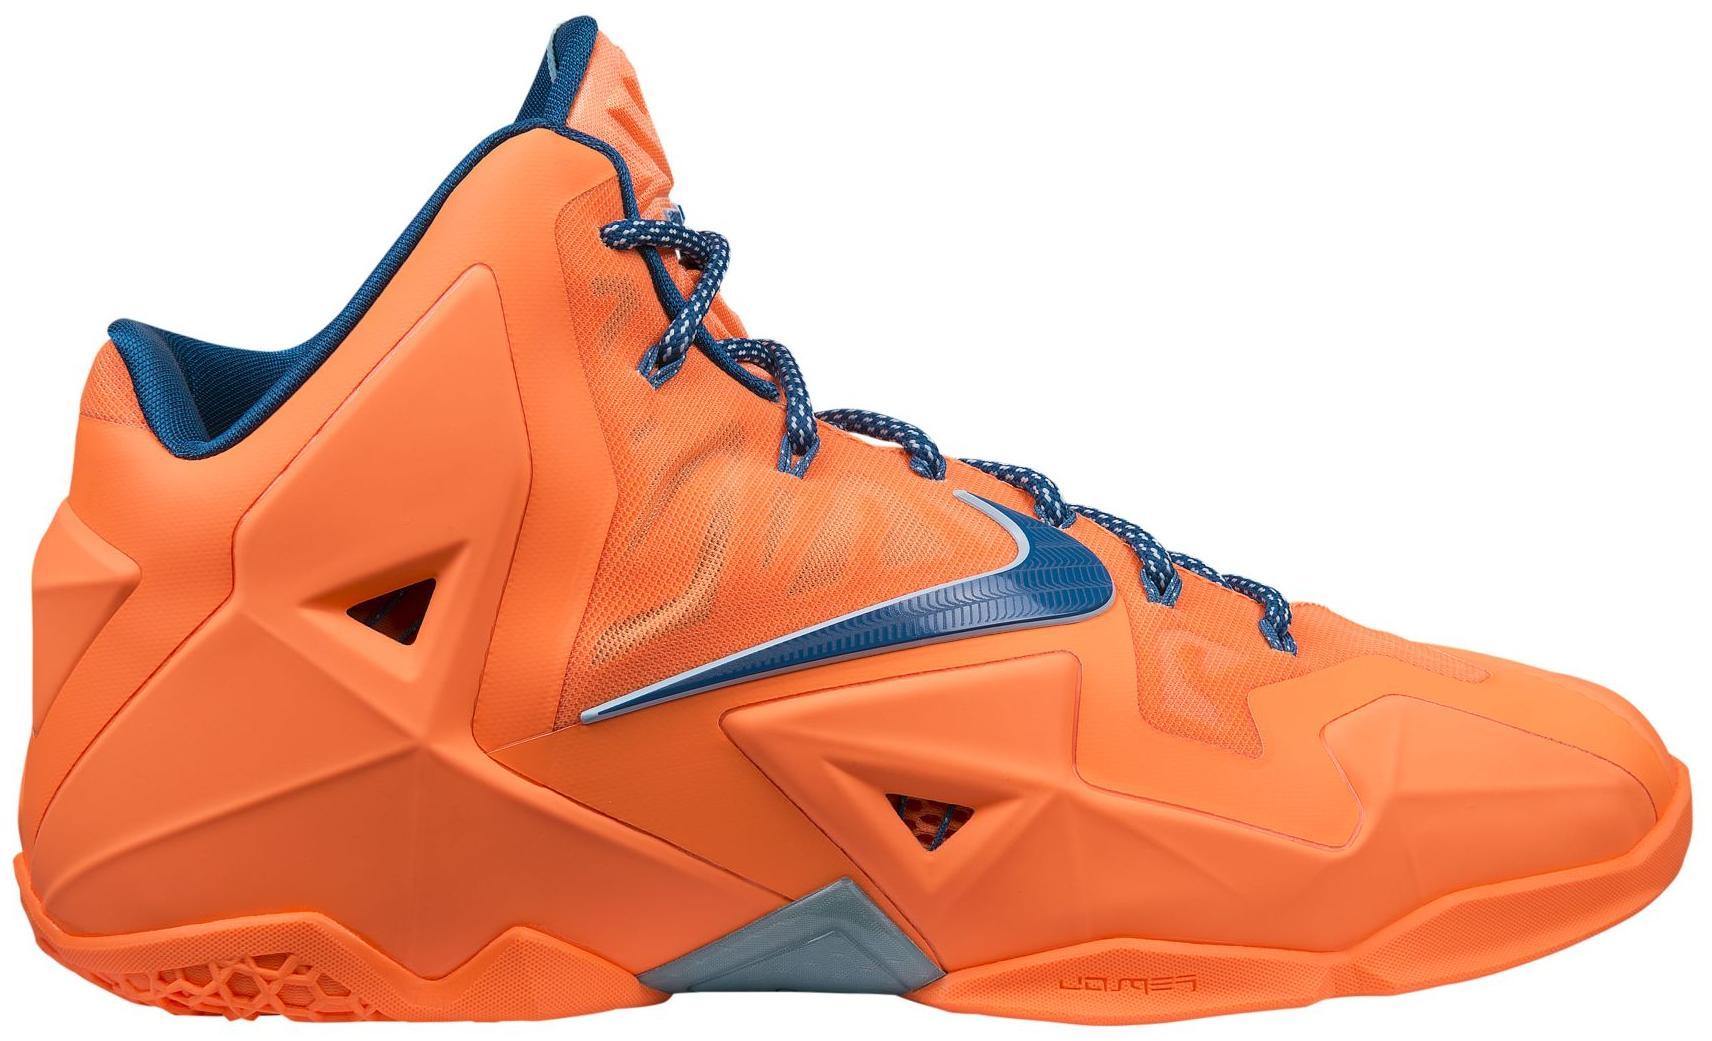 Nike LeBron 11 Knicks - 616175-800